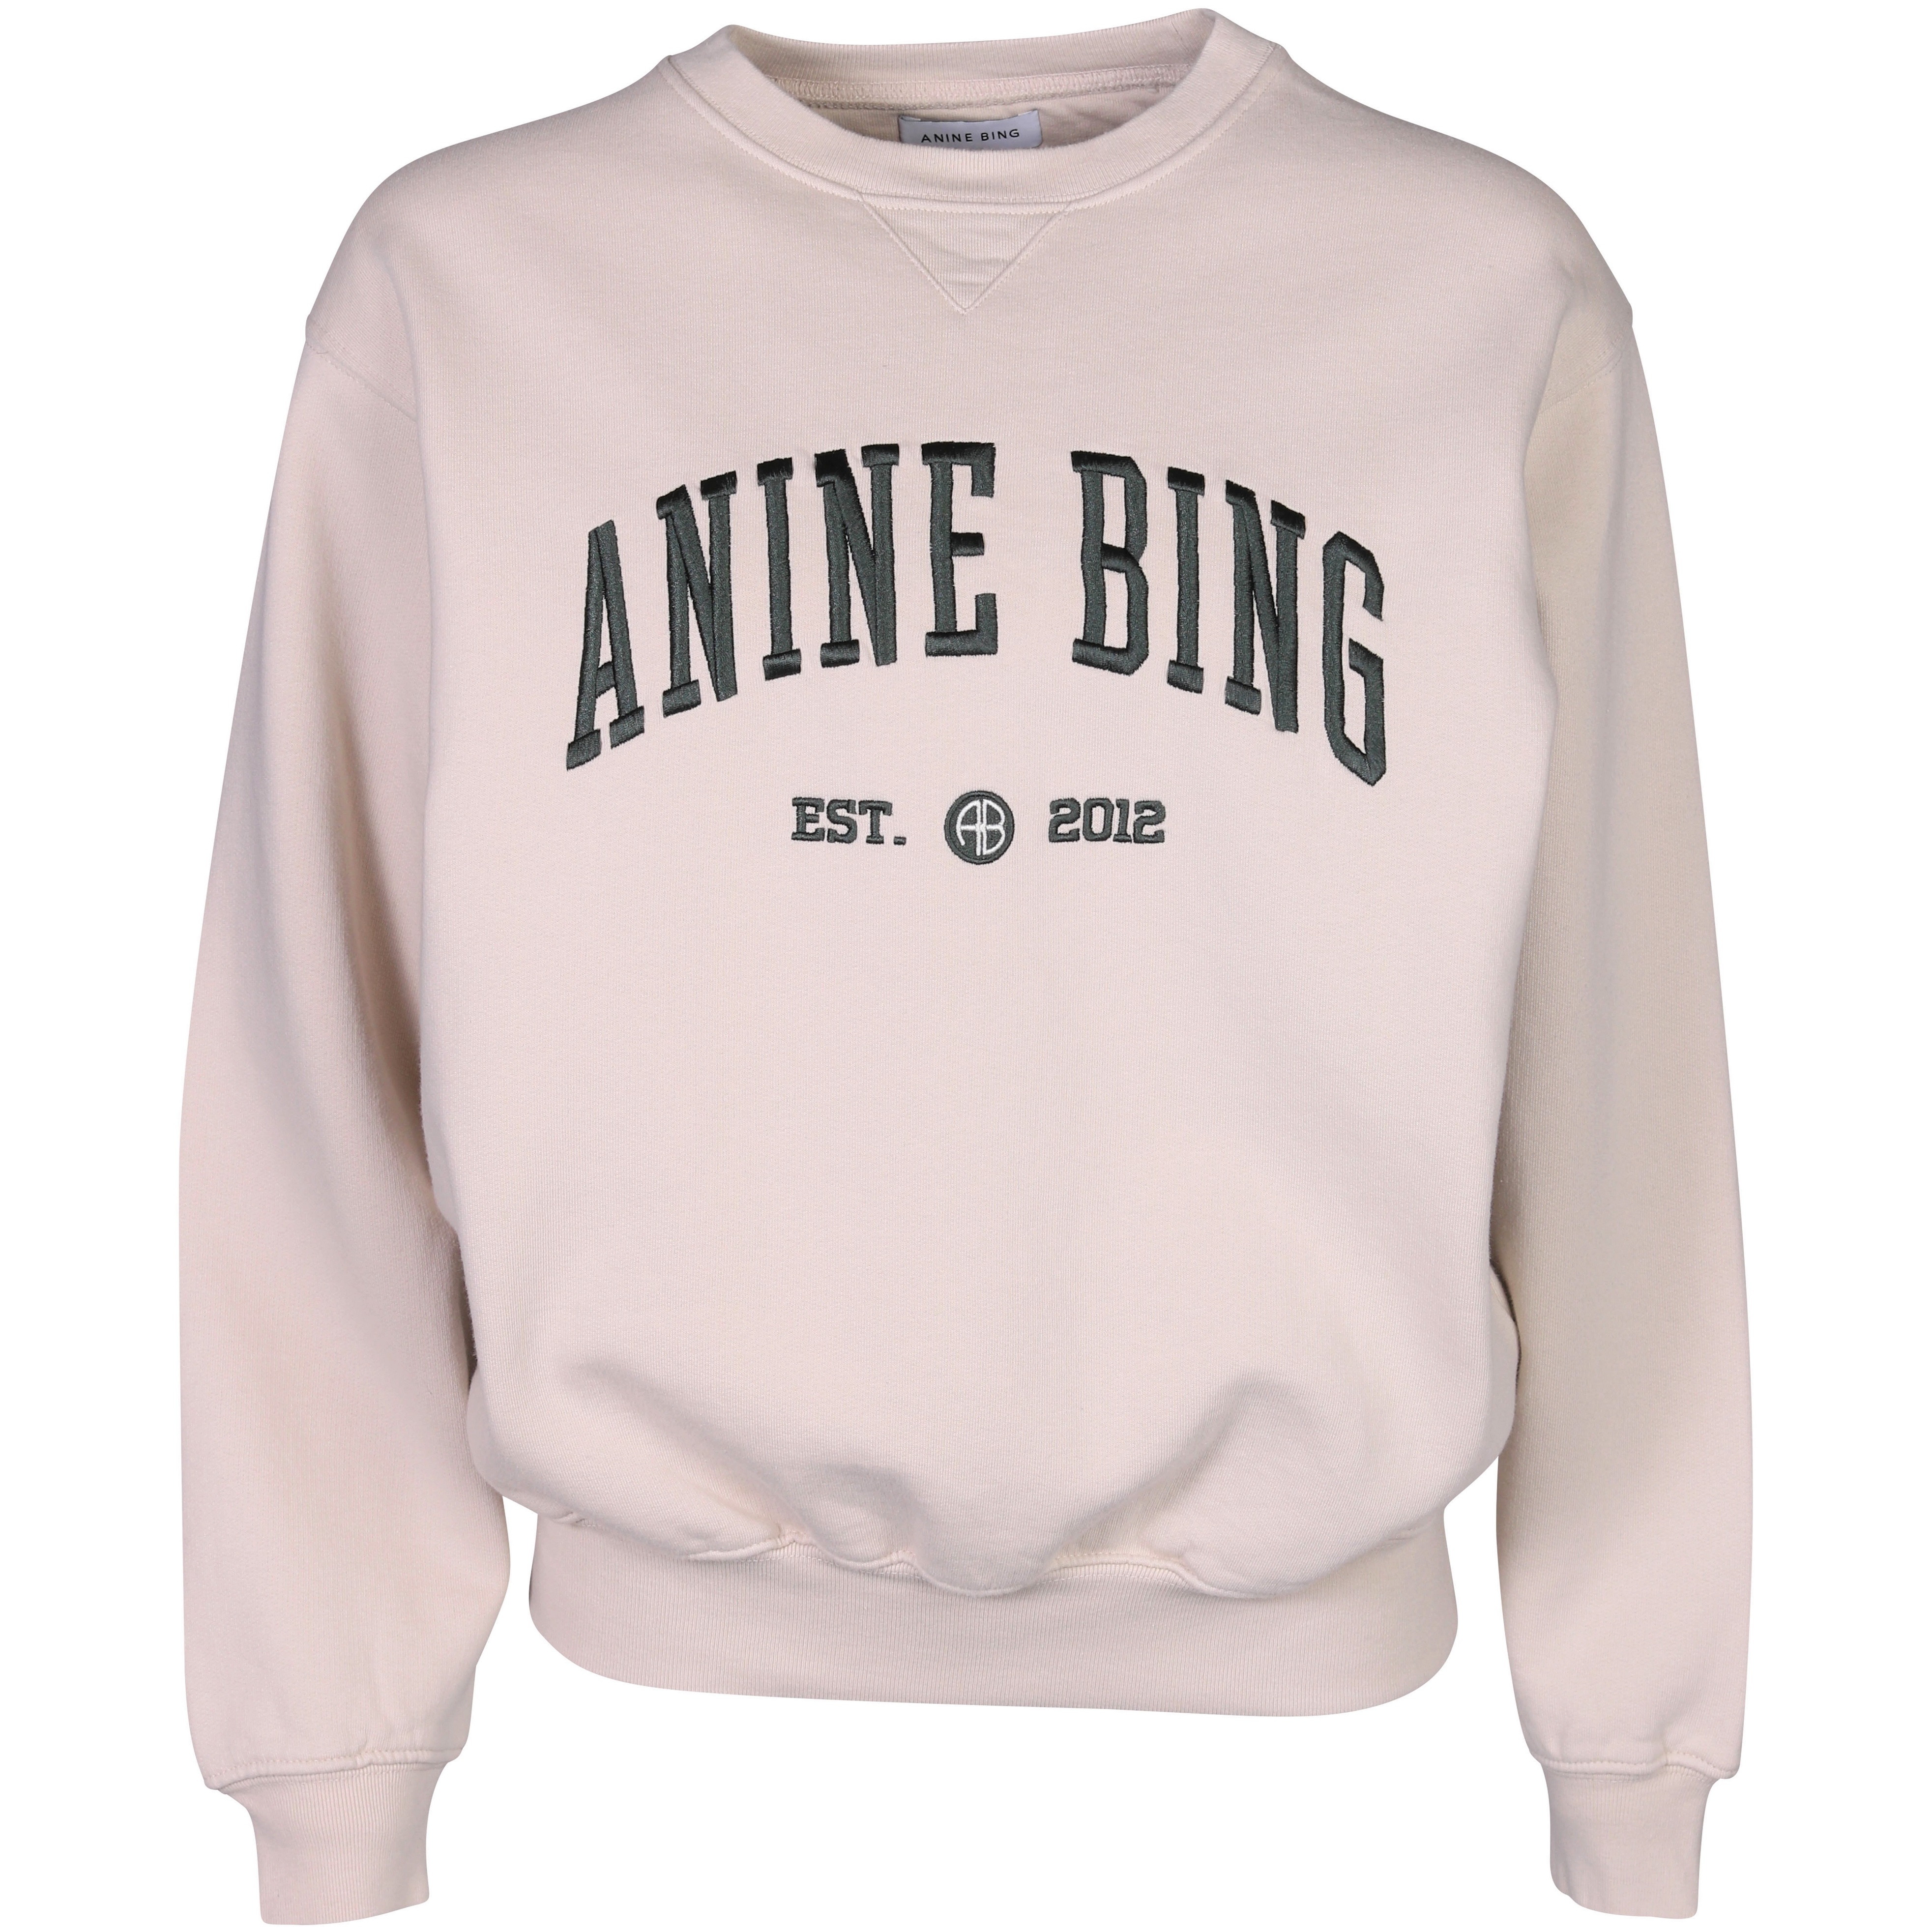 Anine Bing Ramona Sweatshirt University Anine Bing in Grey XS